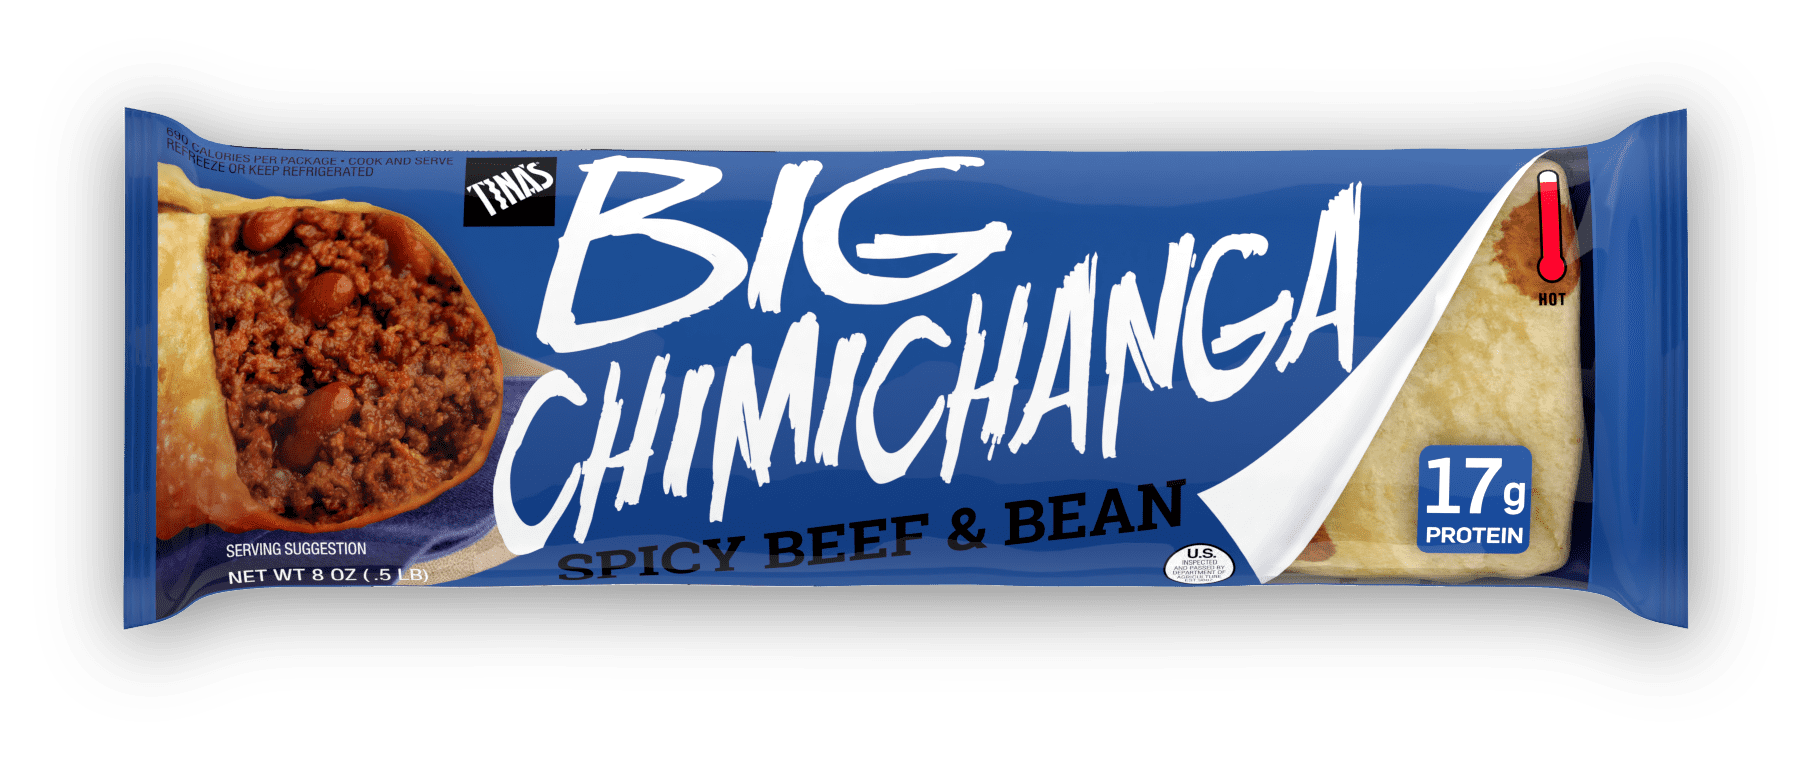 Beef Rib Chimichangas - Angus & Oink